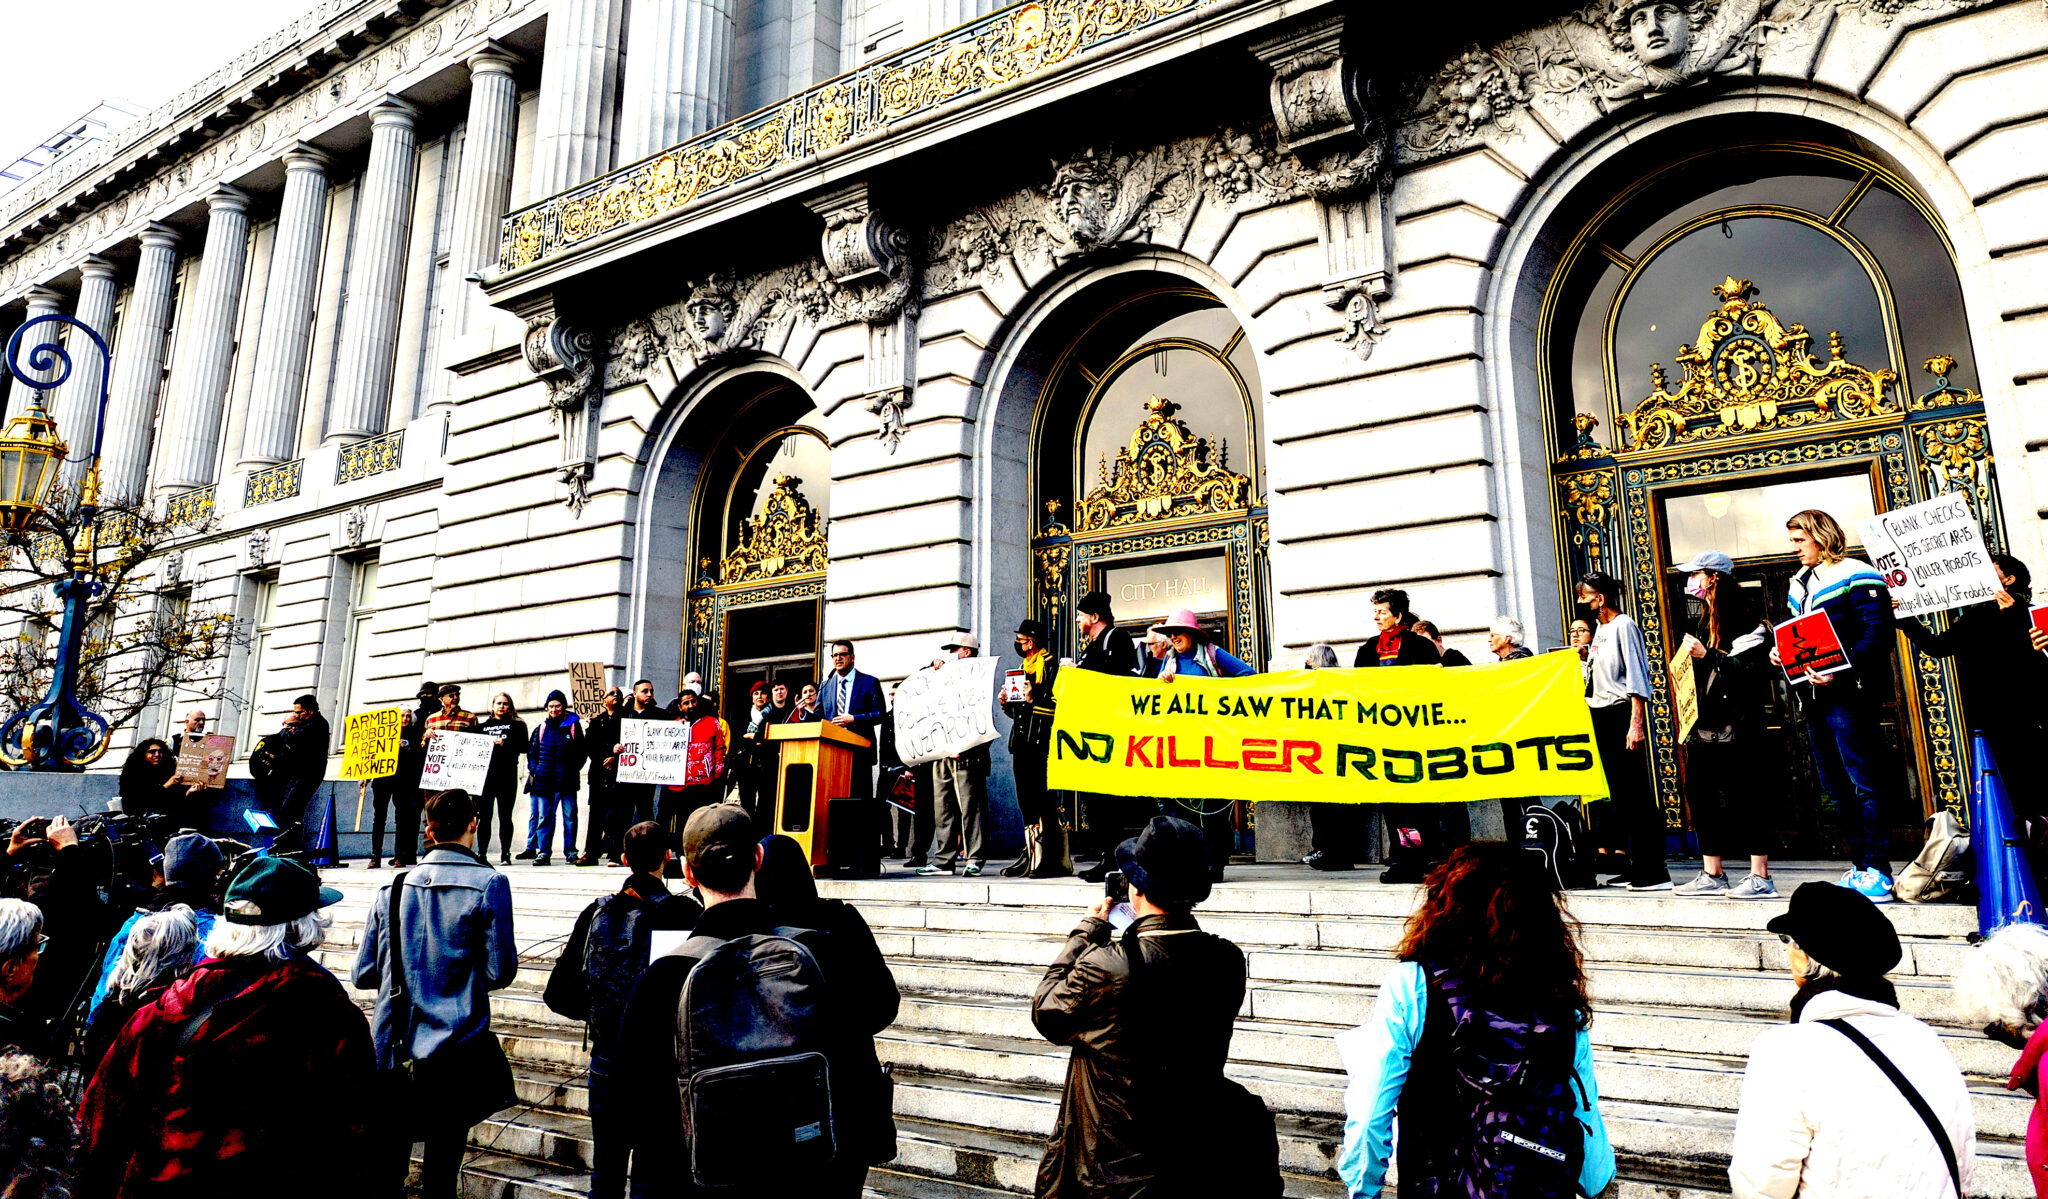 Rally_against_SFPD_killer_robots_20221205-181712605-2-2048x1199.jpg